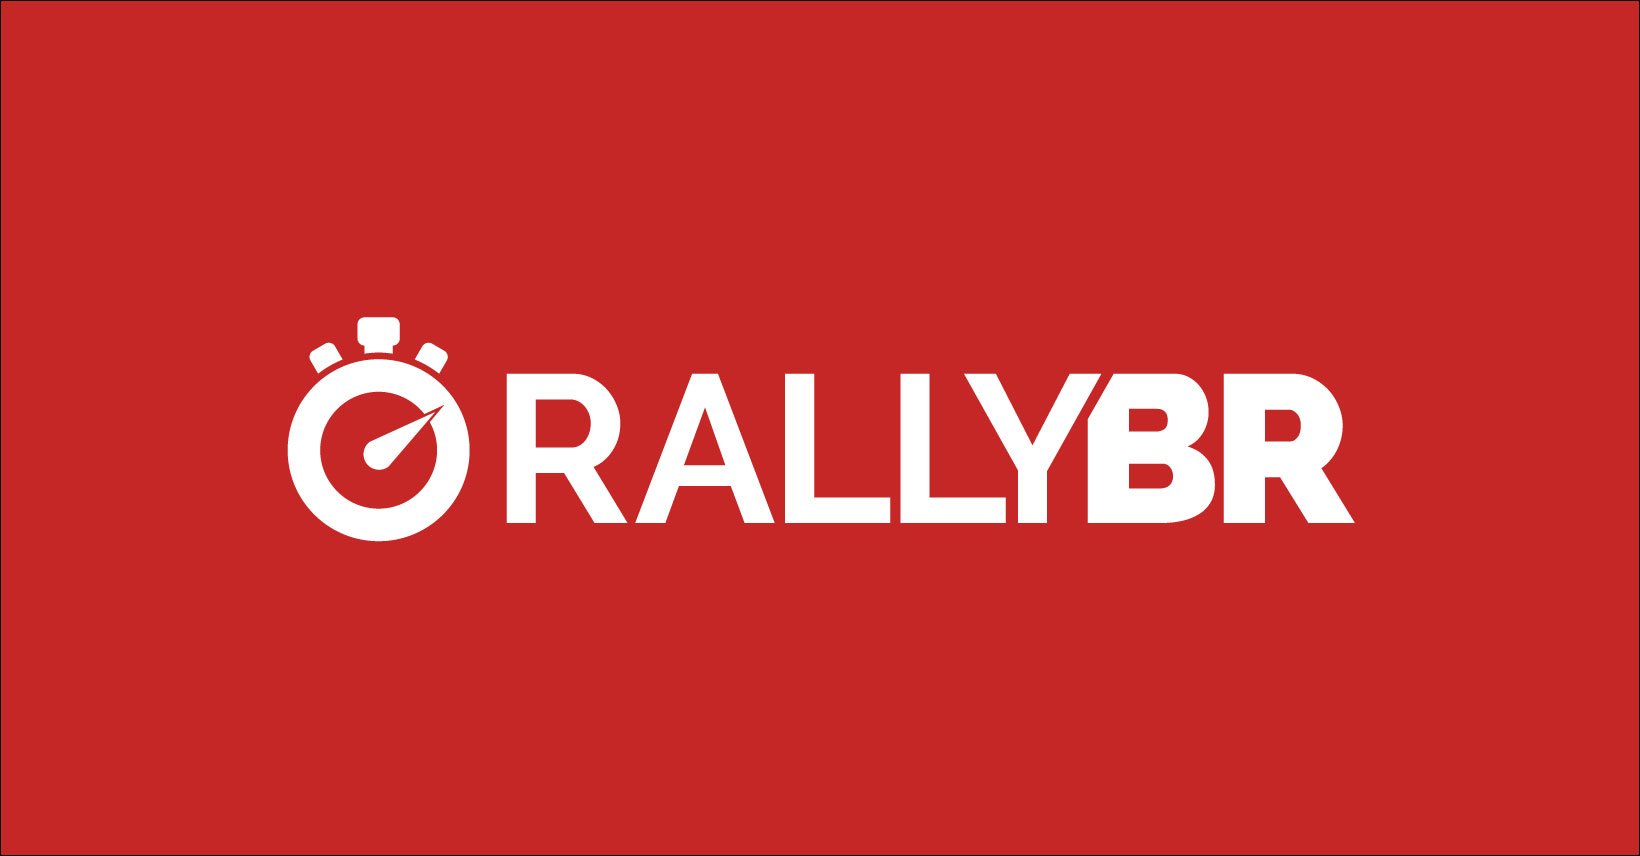 (c) Rallybr.com.br